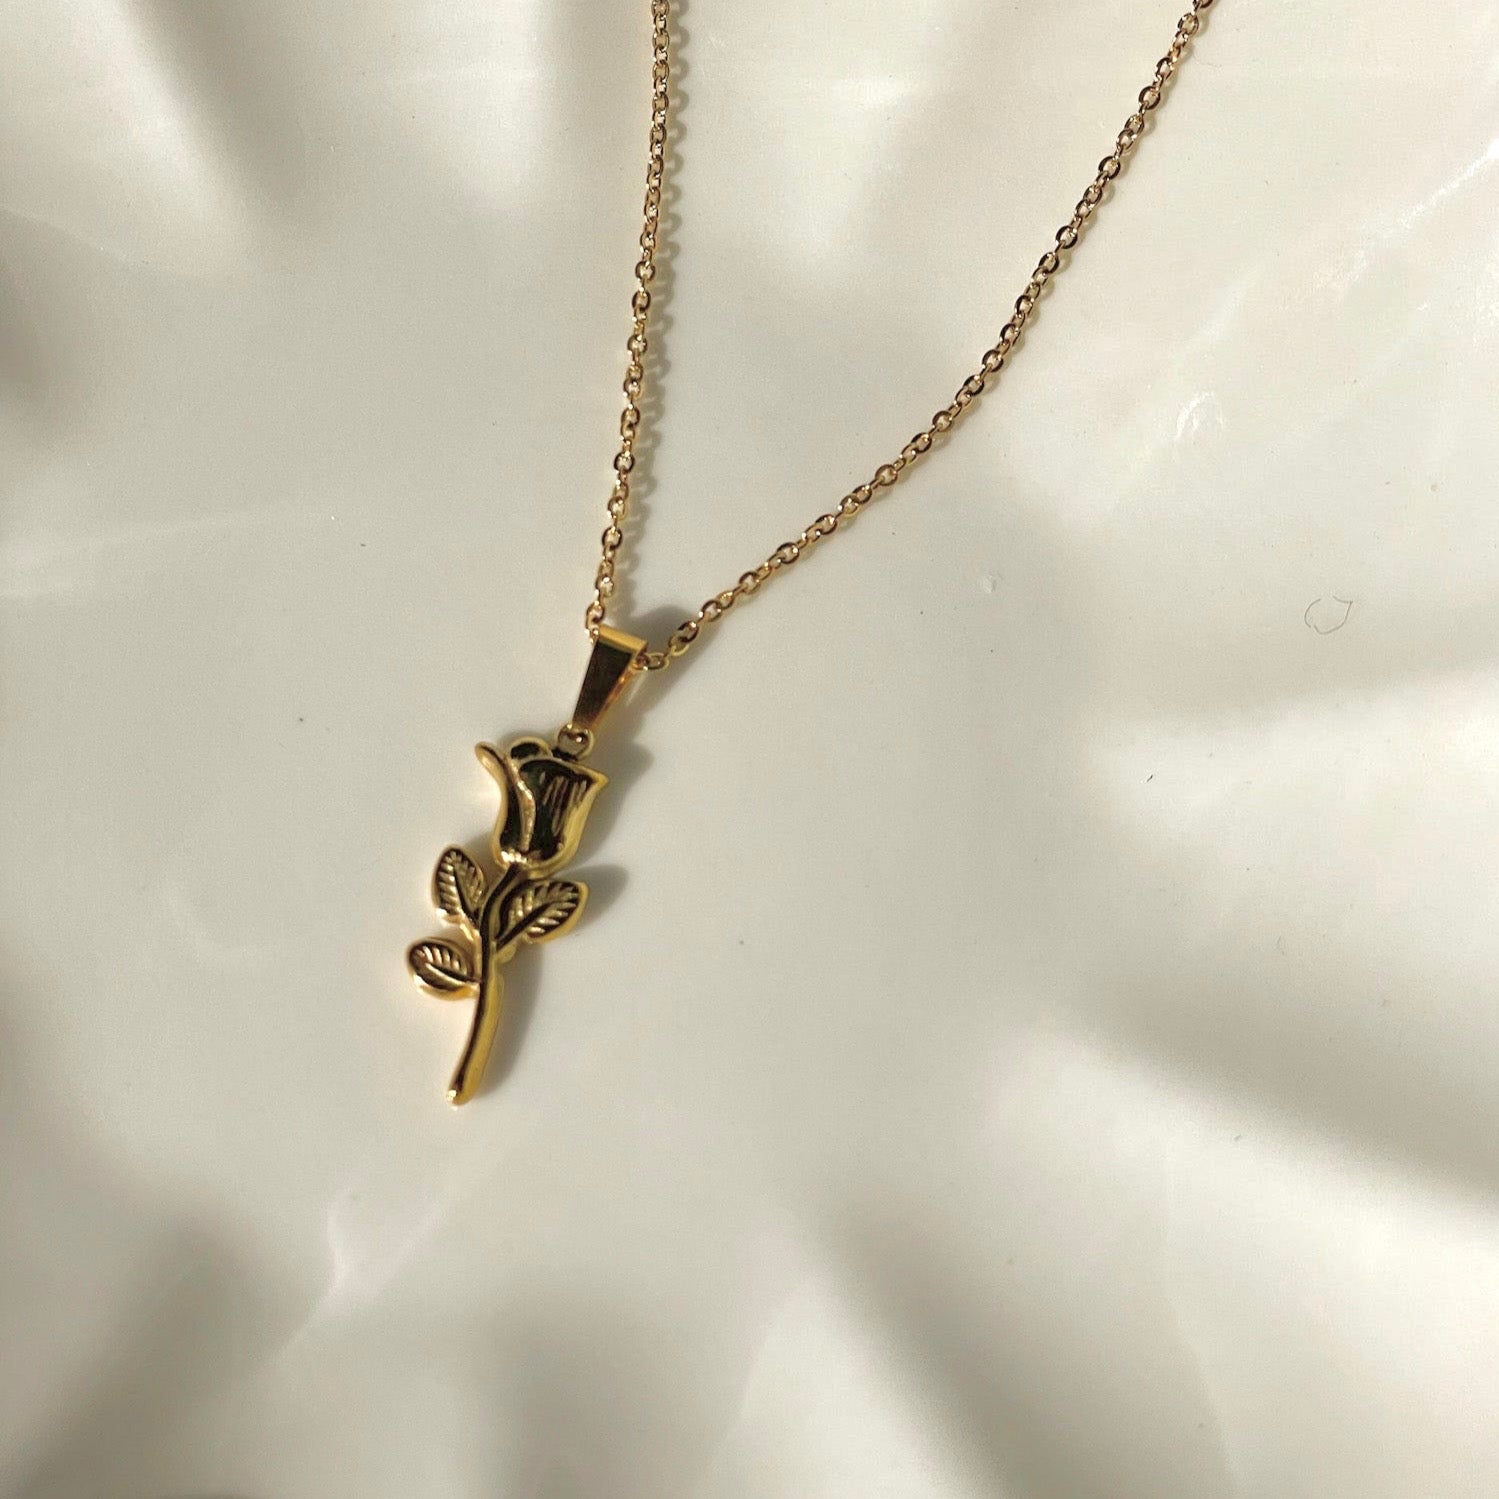 gold rose pendant necklace, Sydney australia